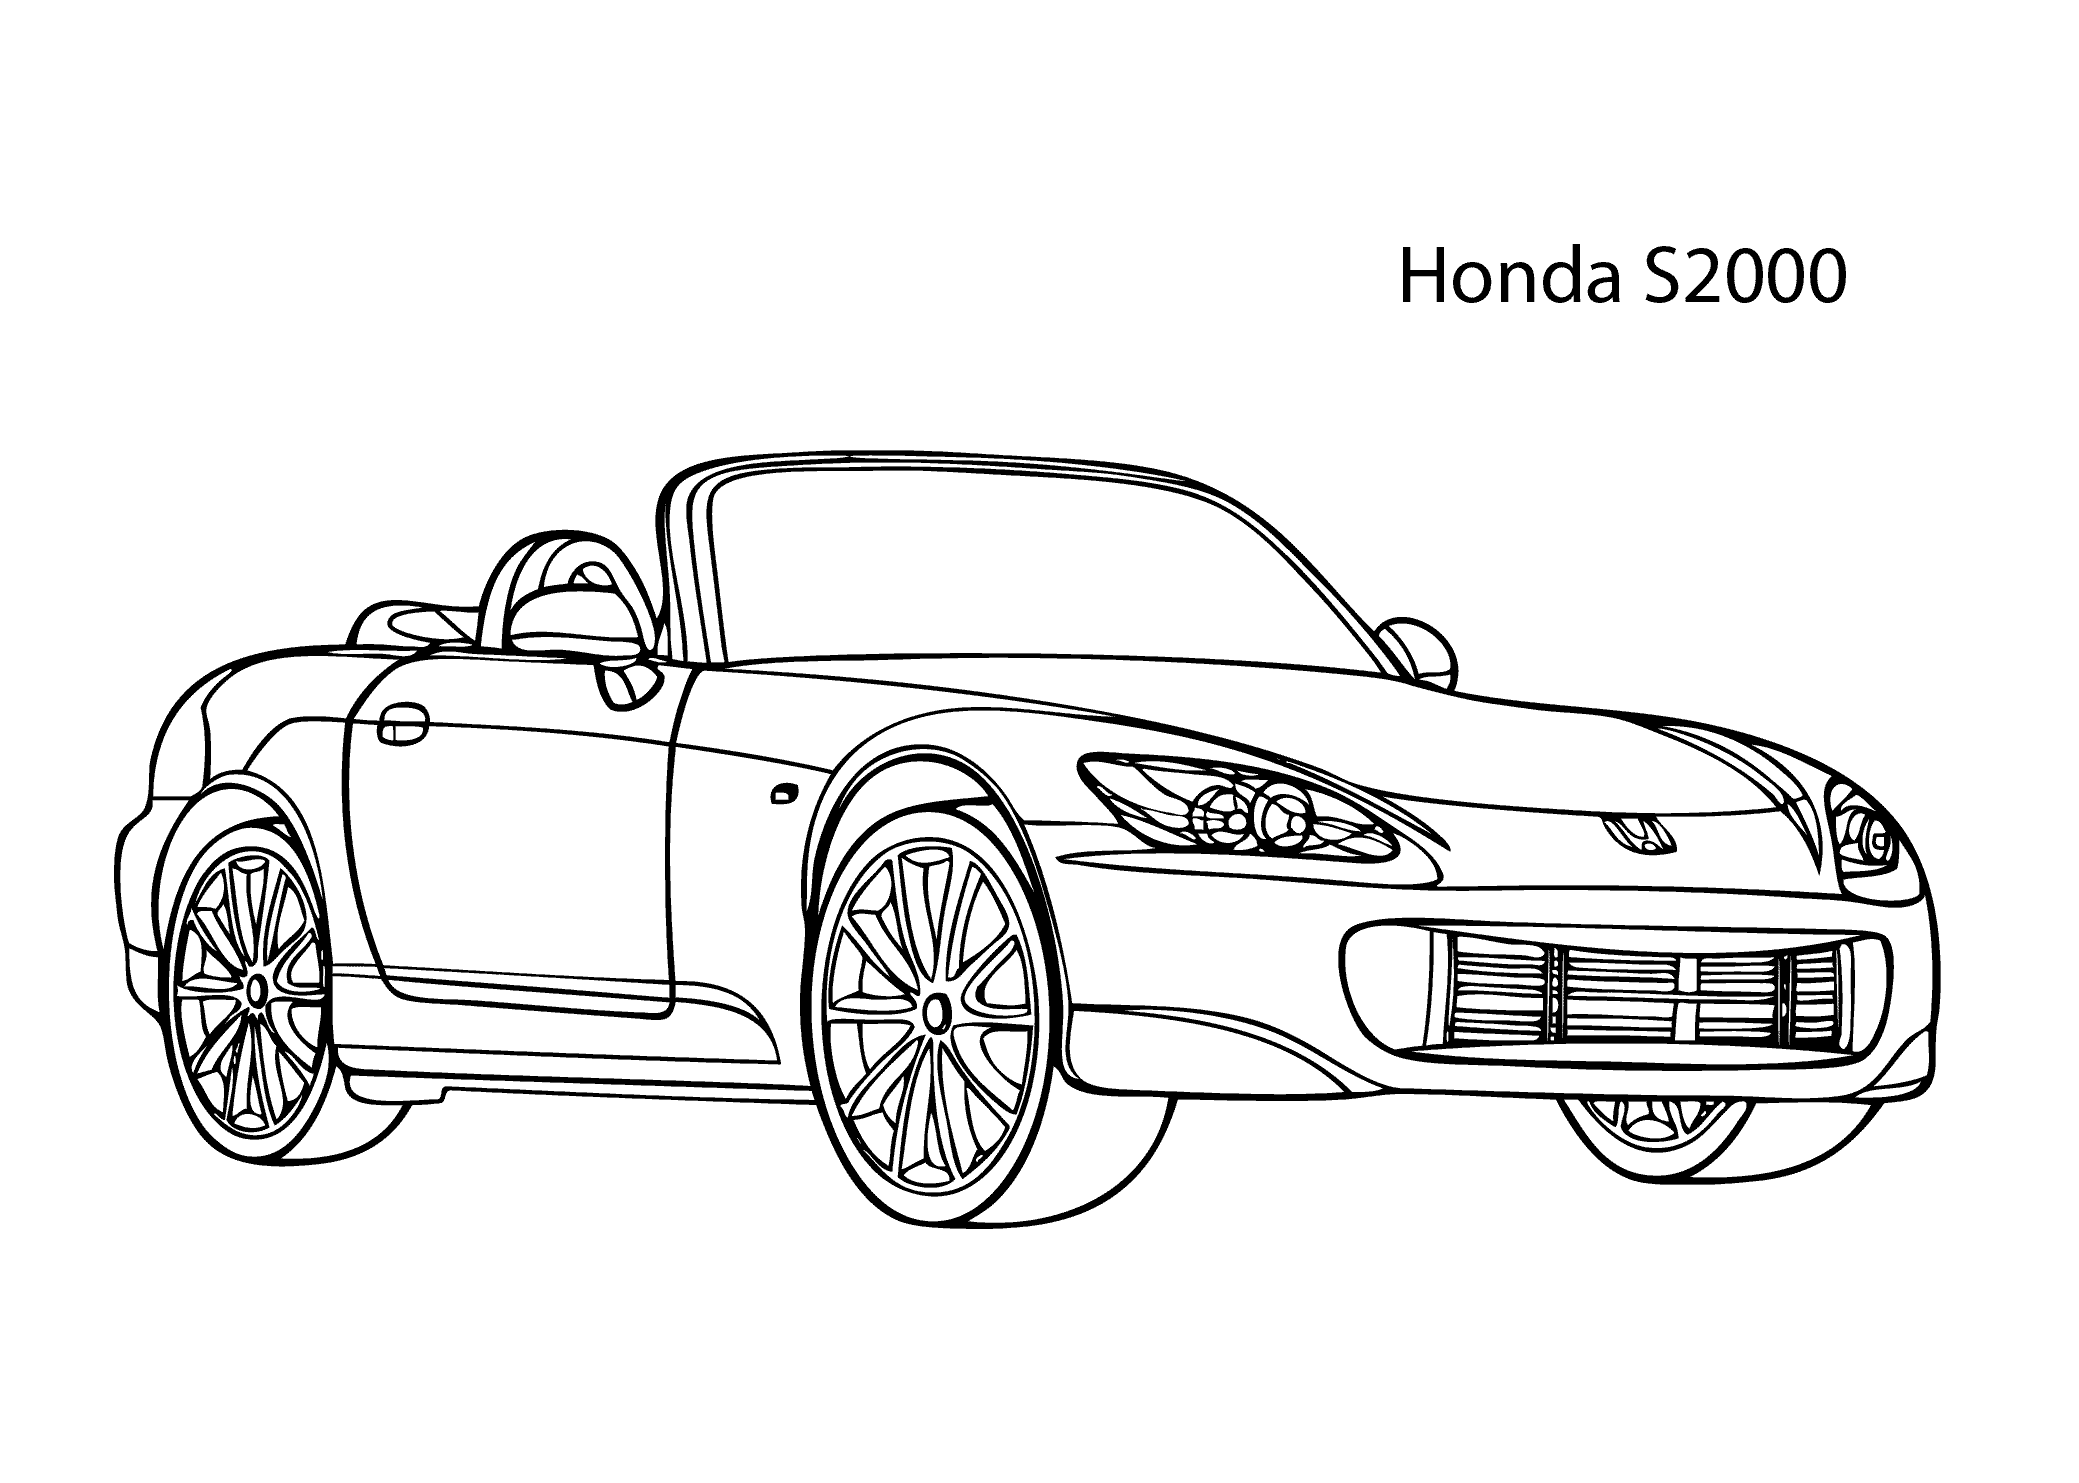 Super car Honda S2000 coloring page, cool car printable free ...